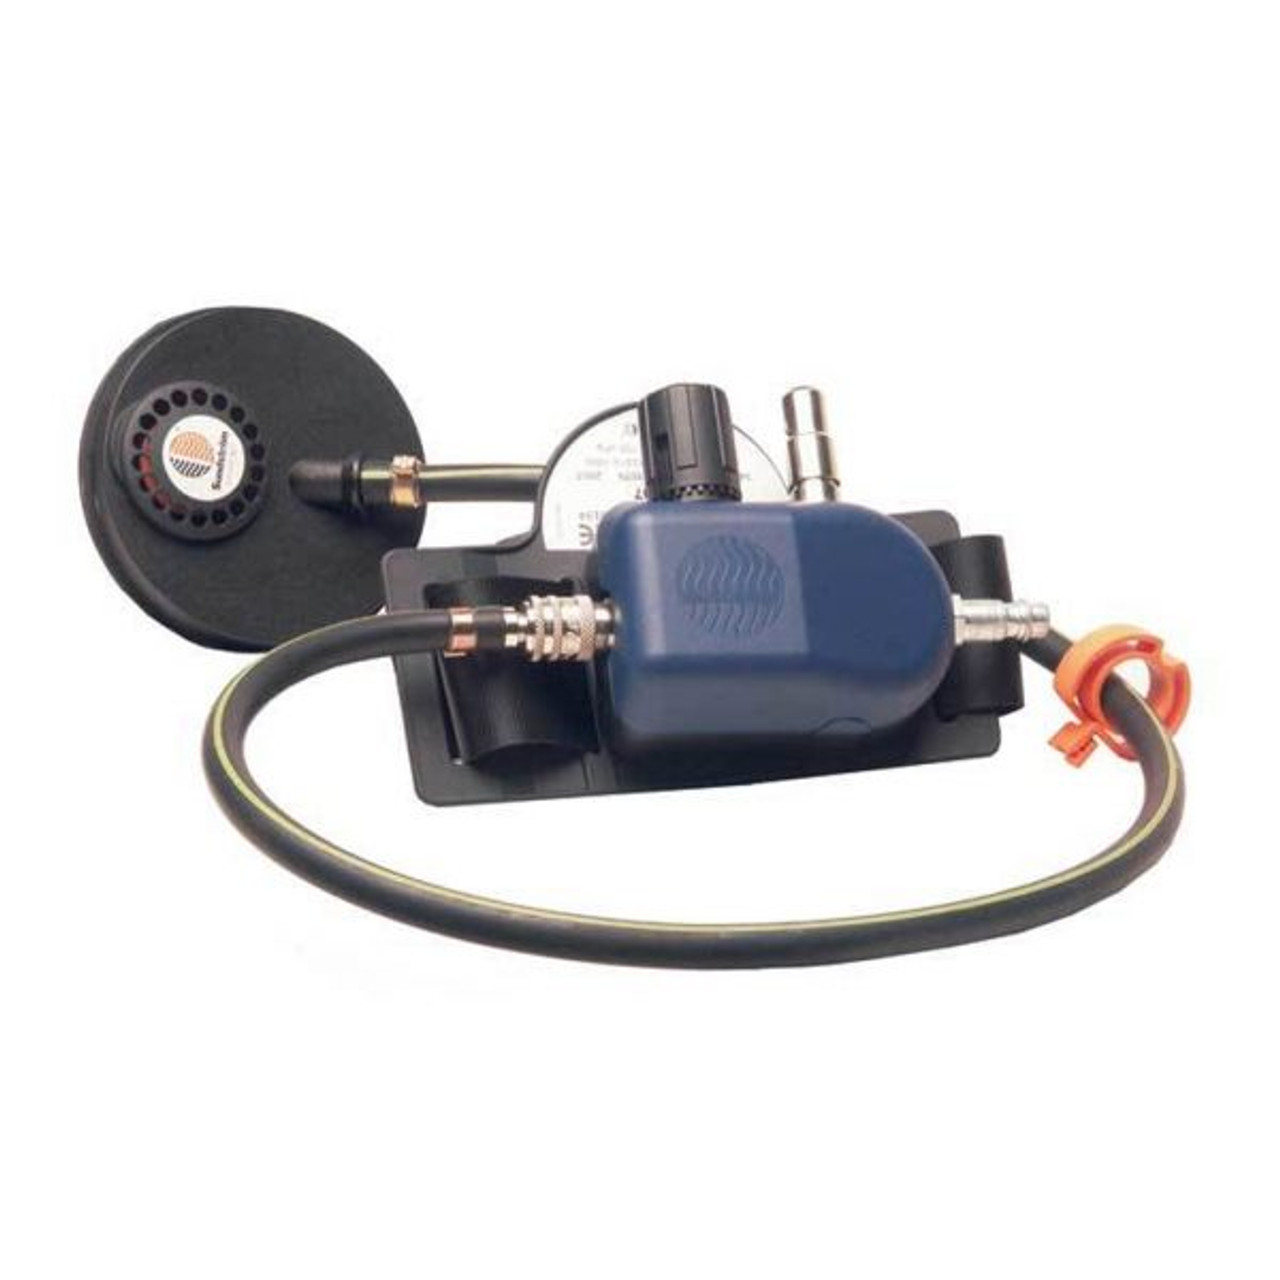 Sundstrom Compressed Air Supply Adaptor